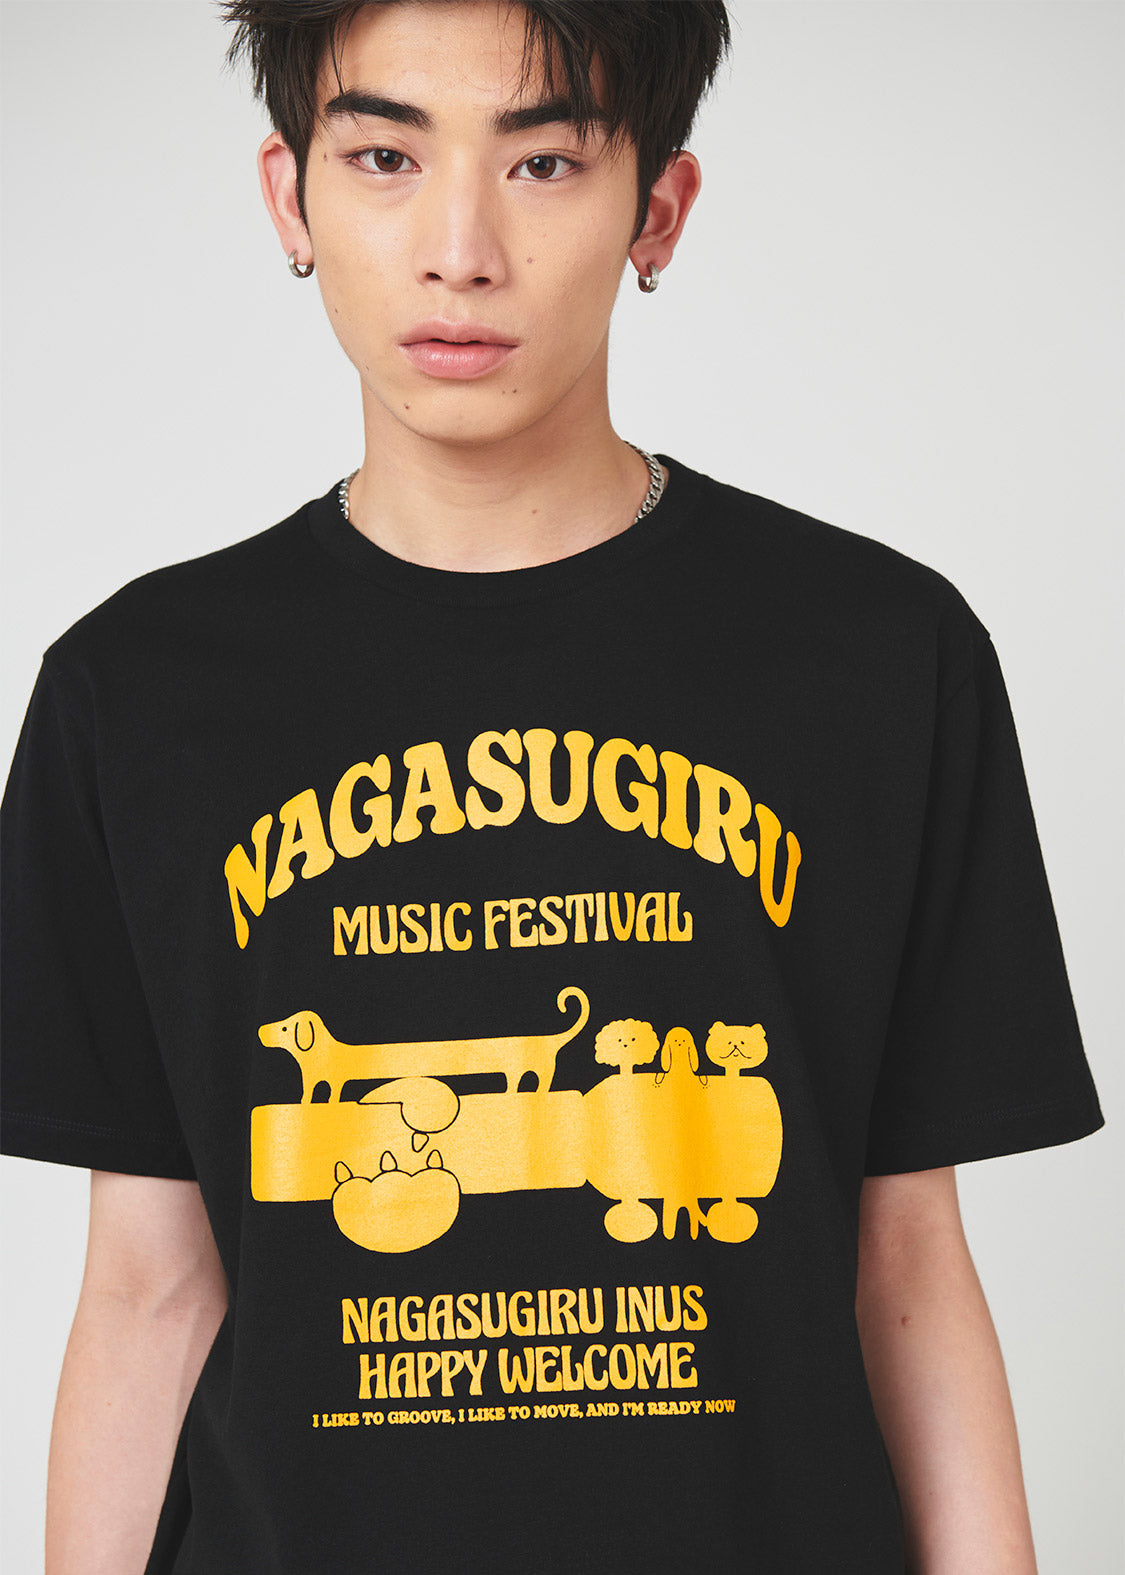 Nagasugiru Music Festival